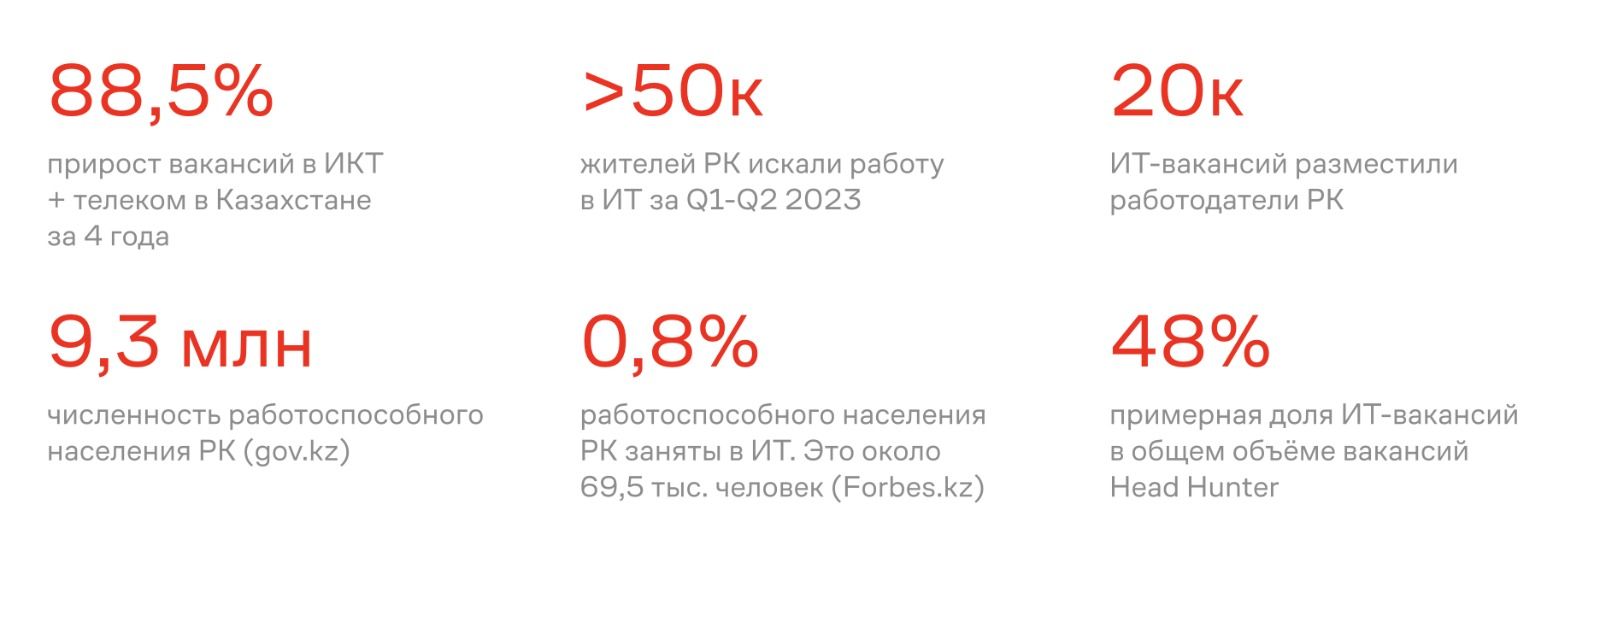 Восемь трендов на IT-рынке Казахстана 2045049 - Kapital.kz 